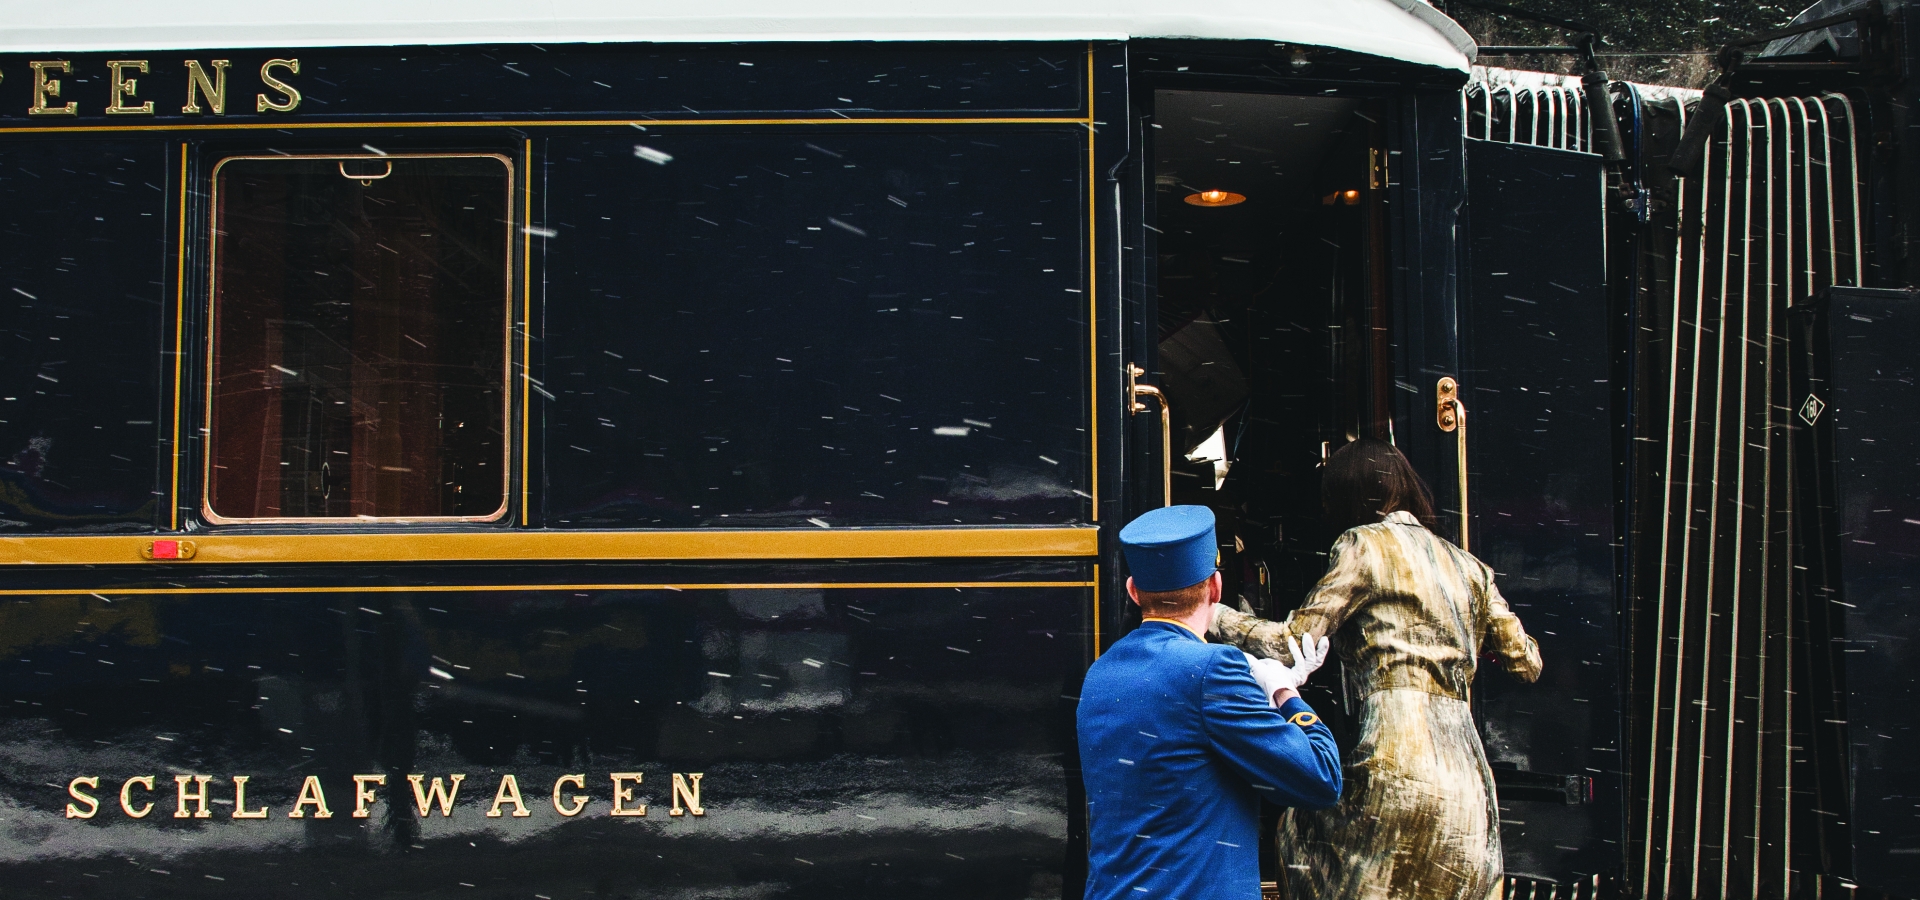 Venice Simplon-Orient-Express Train | Railbookers®